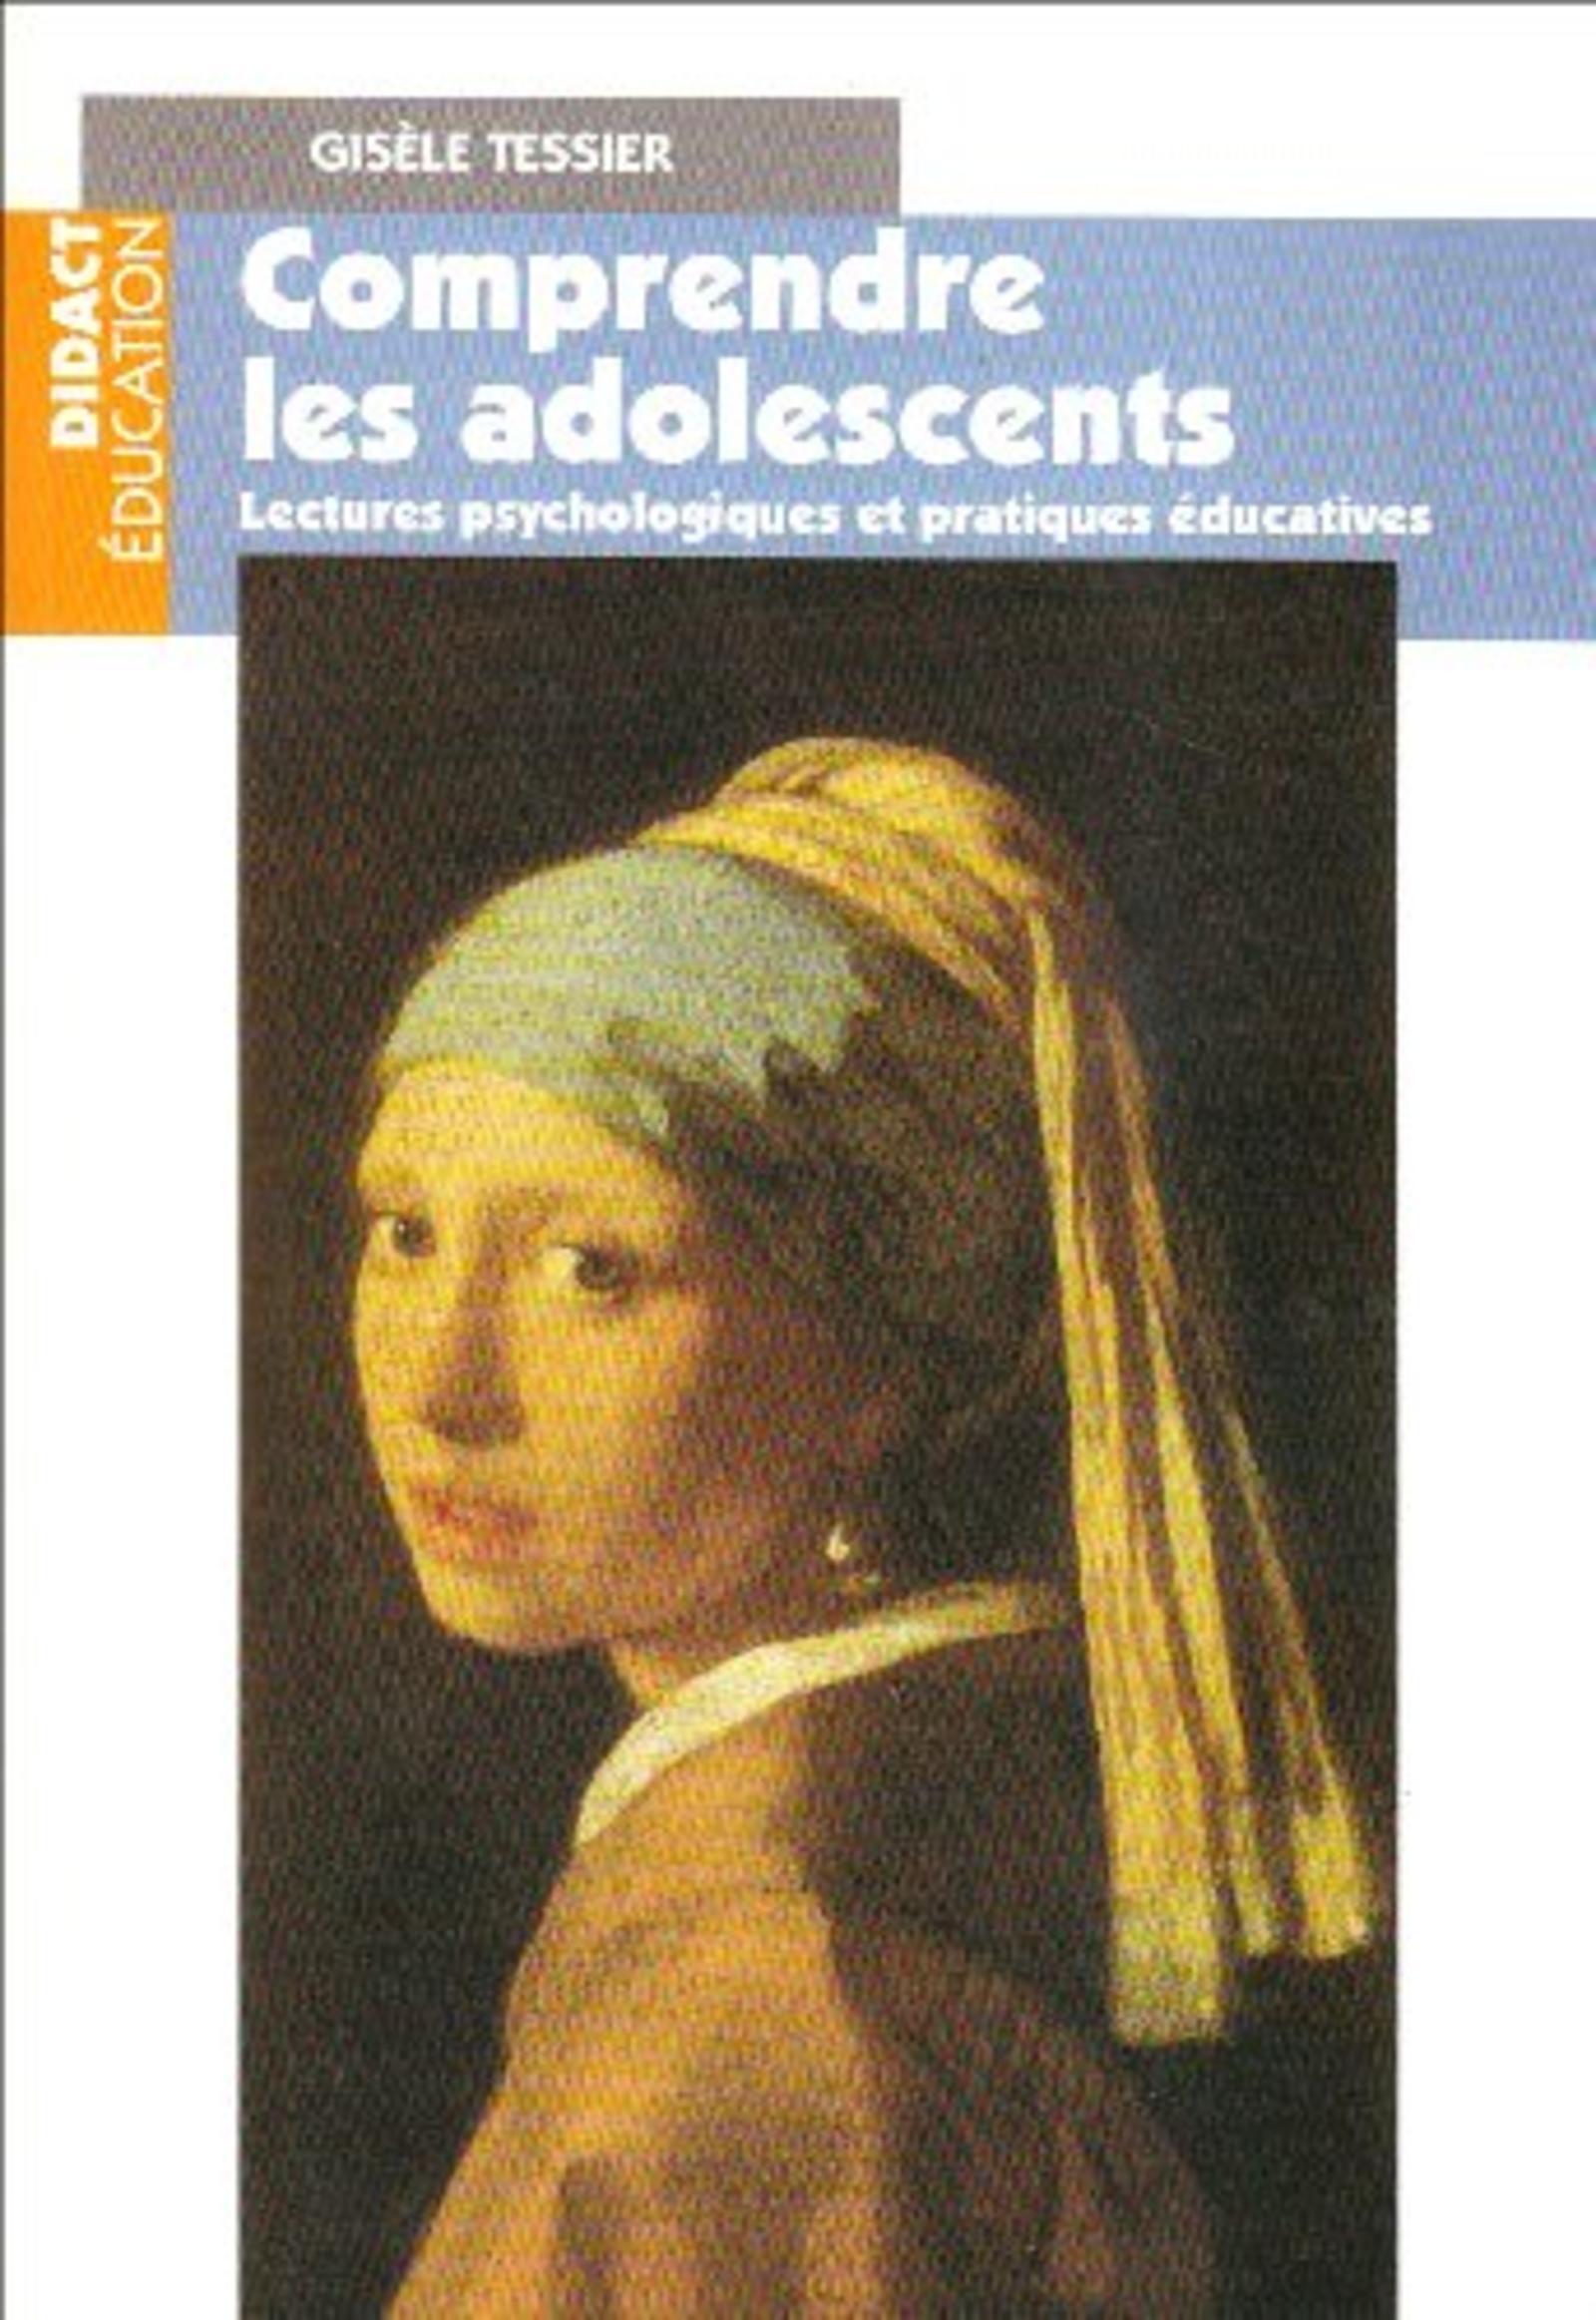 COMPRENDRE LES ADOLESCENTS (9782868472557-front-cover)